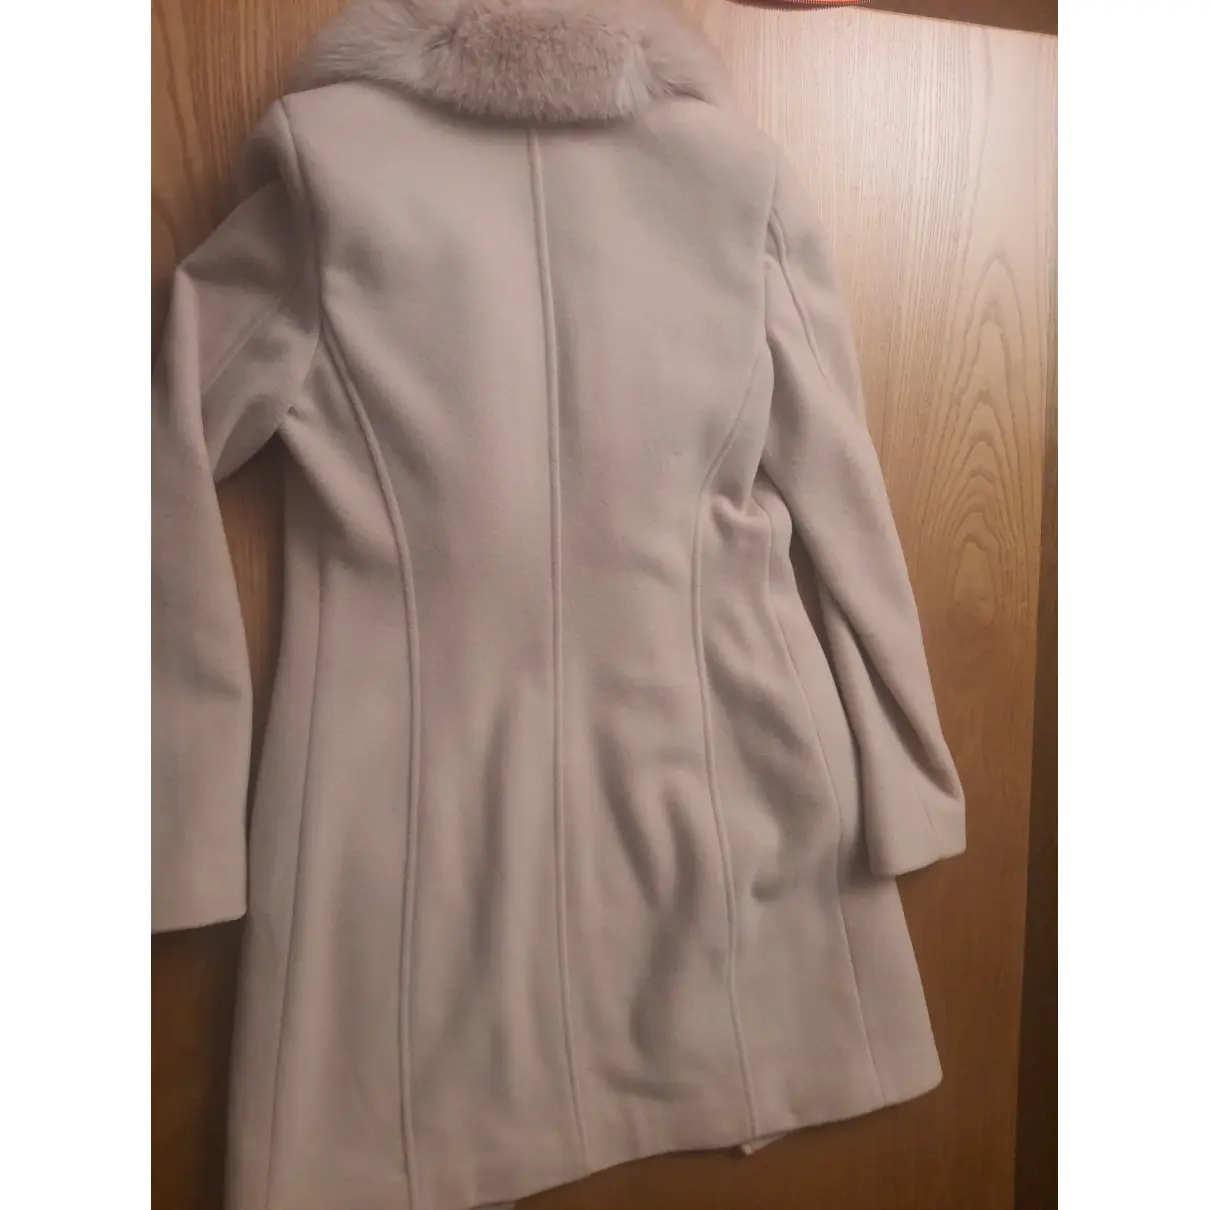 Buy Flavio Castellani Wool coat online